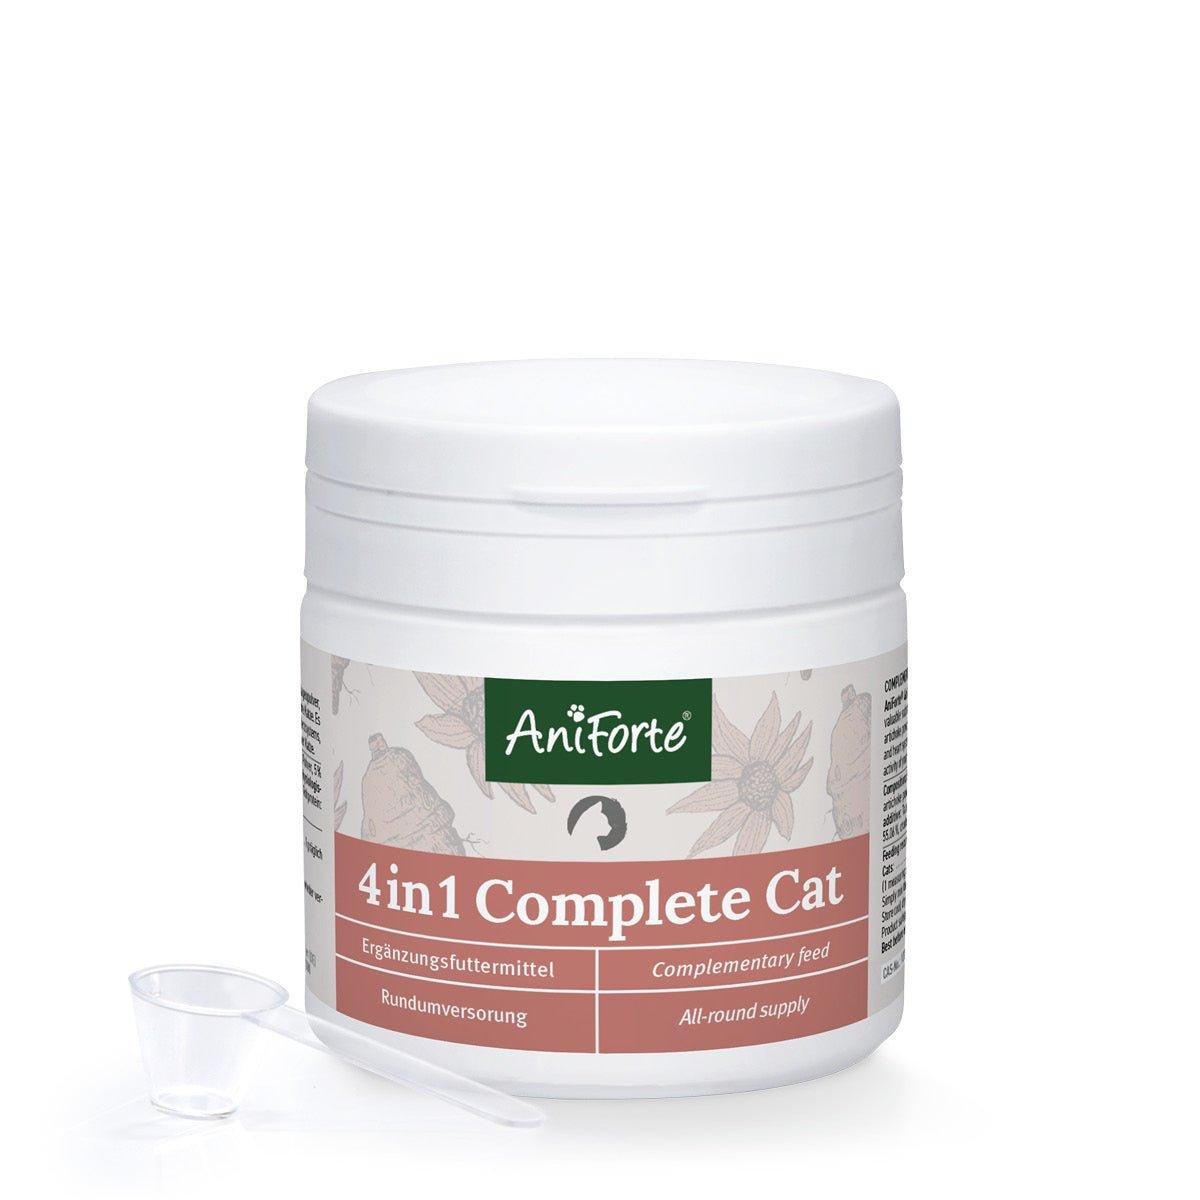 aniforte 4in1 Complete Cat - 60 Gramm